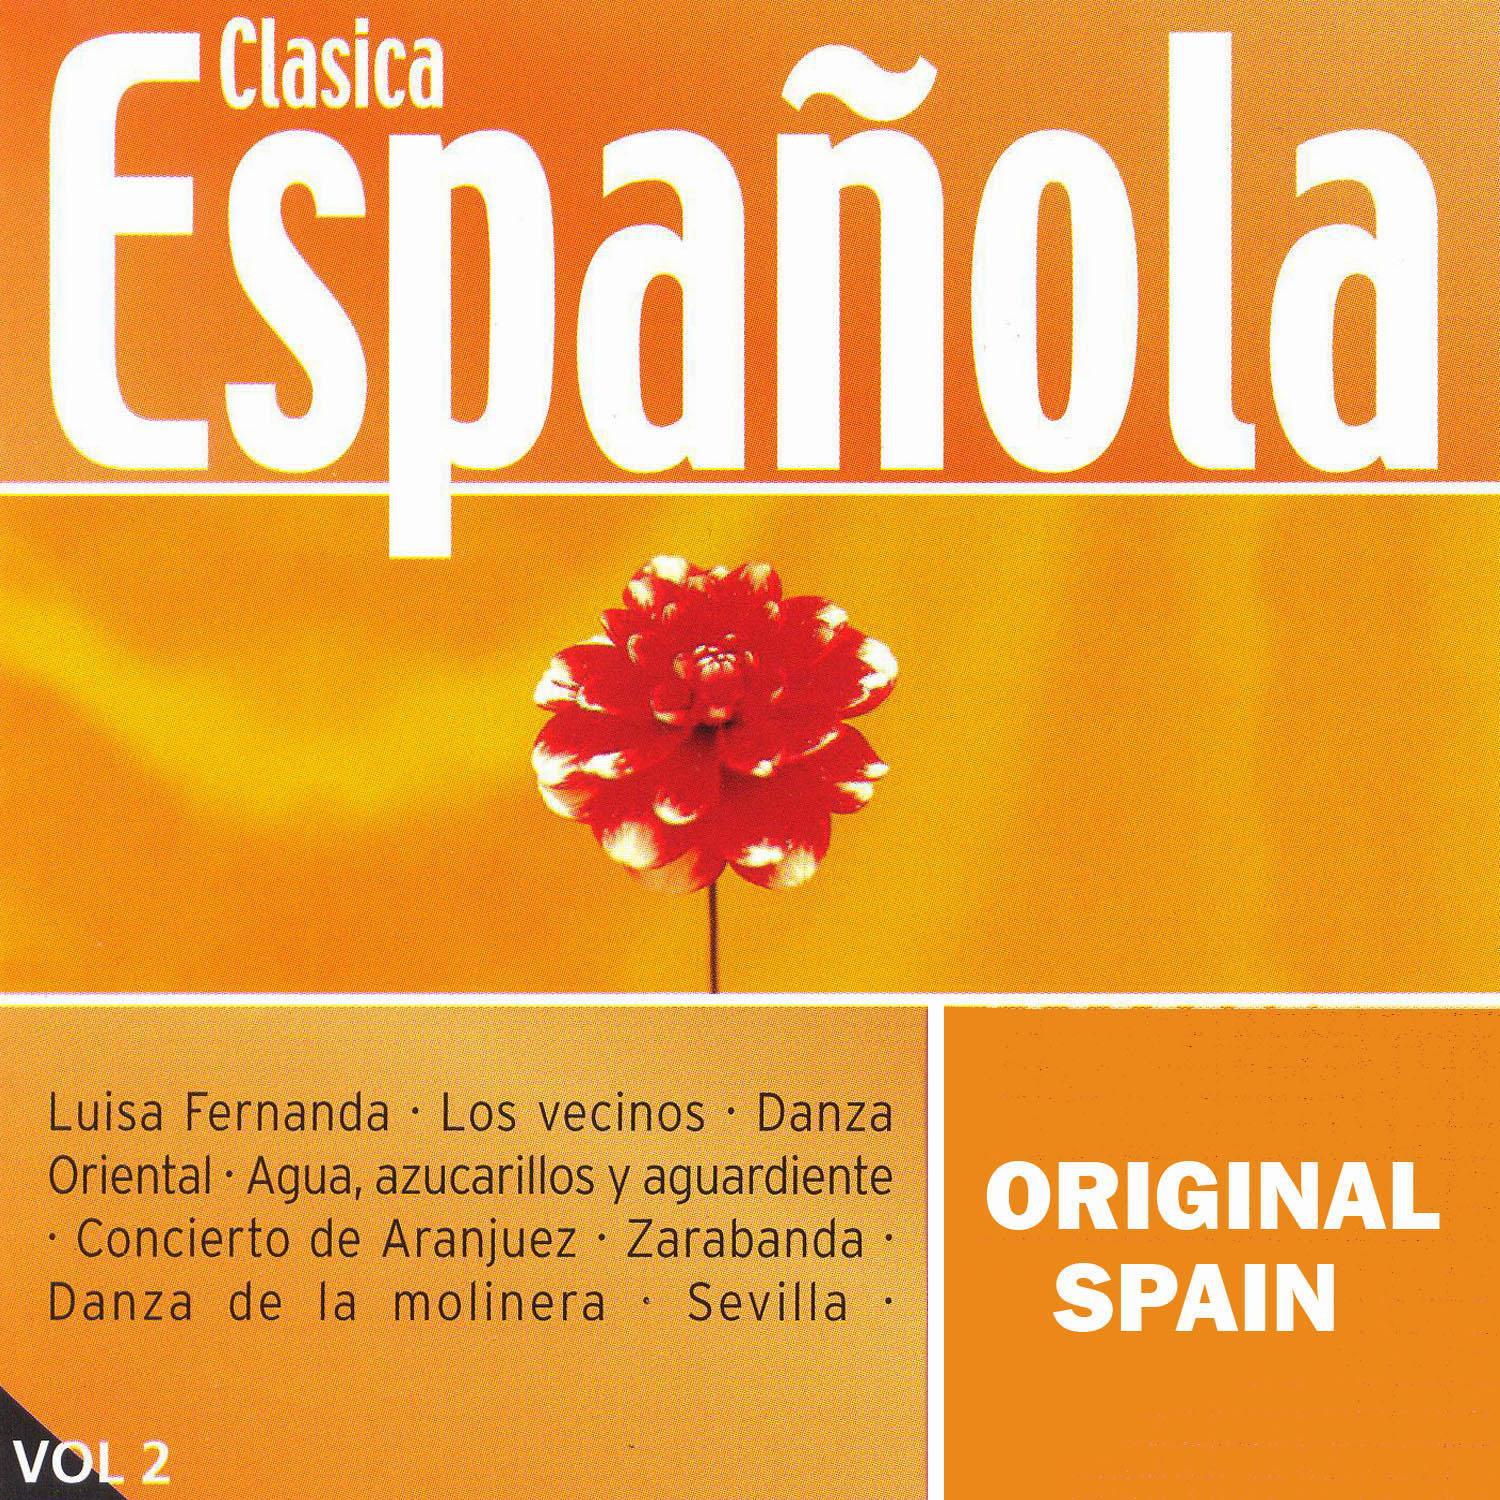 Original Spain: Cla sica Espa ola Vol. 2